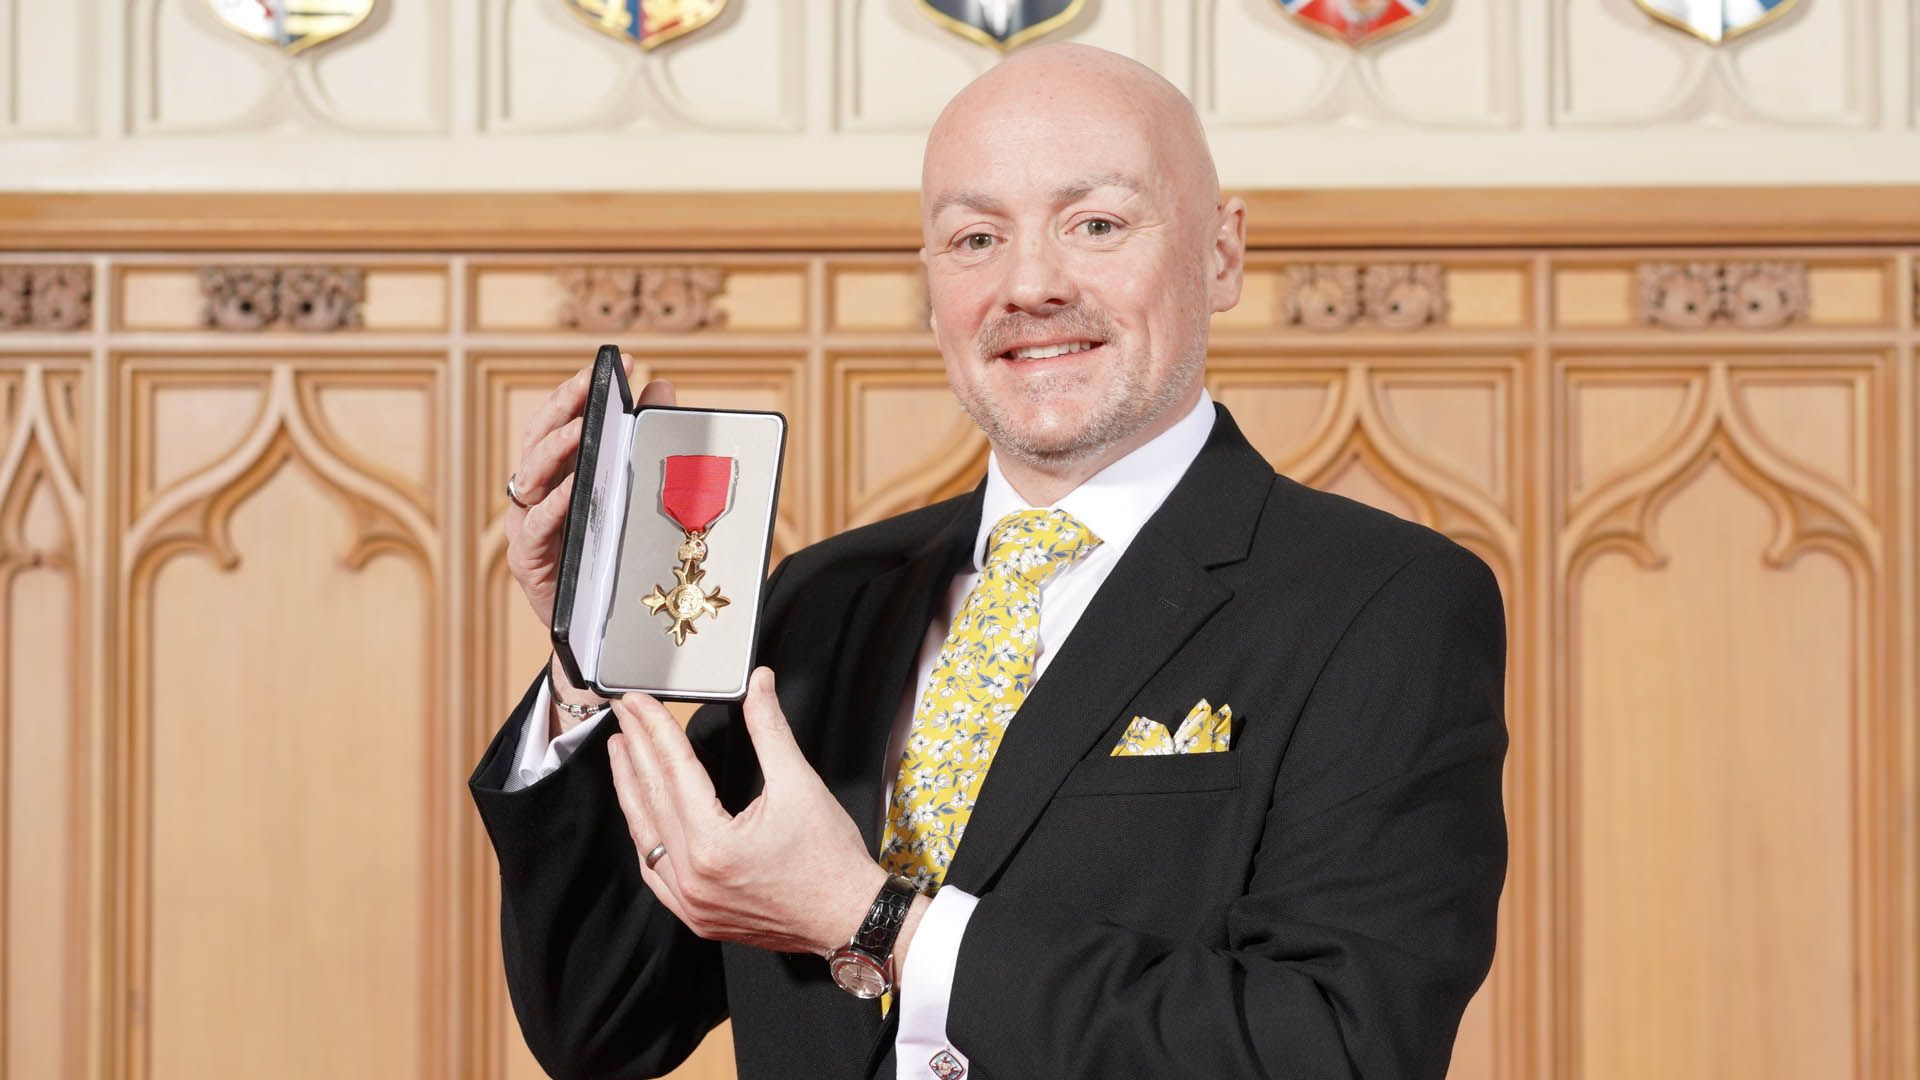  Everton Free School Principal Awarded OBE